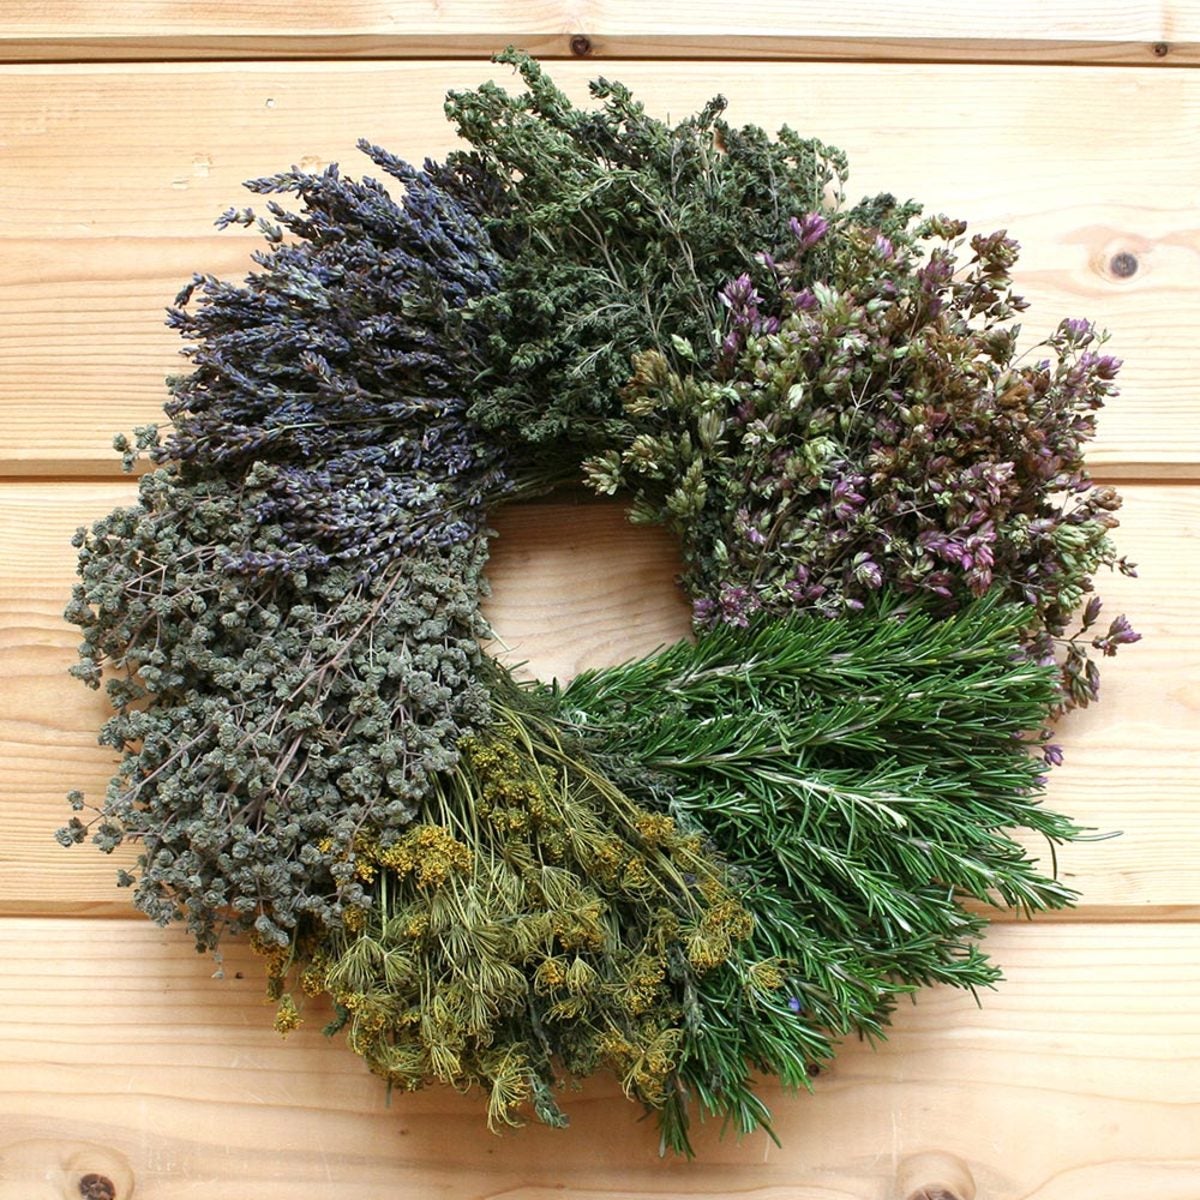 Organic Segmented Herb Wreath